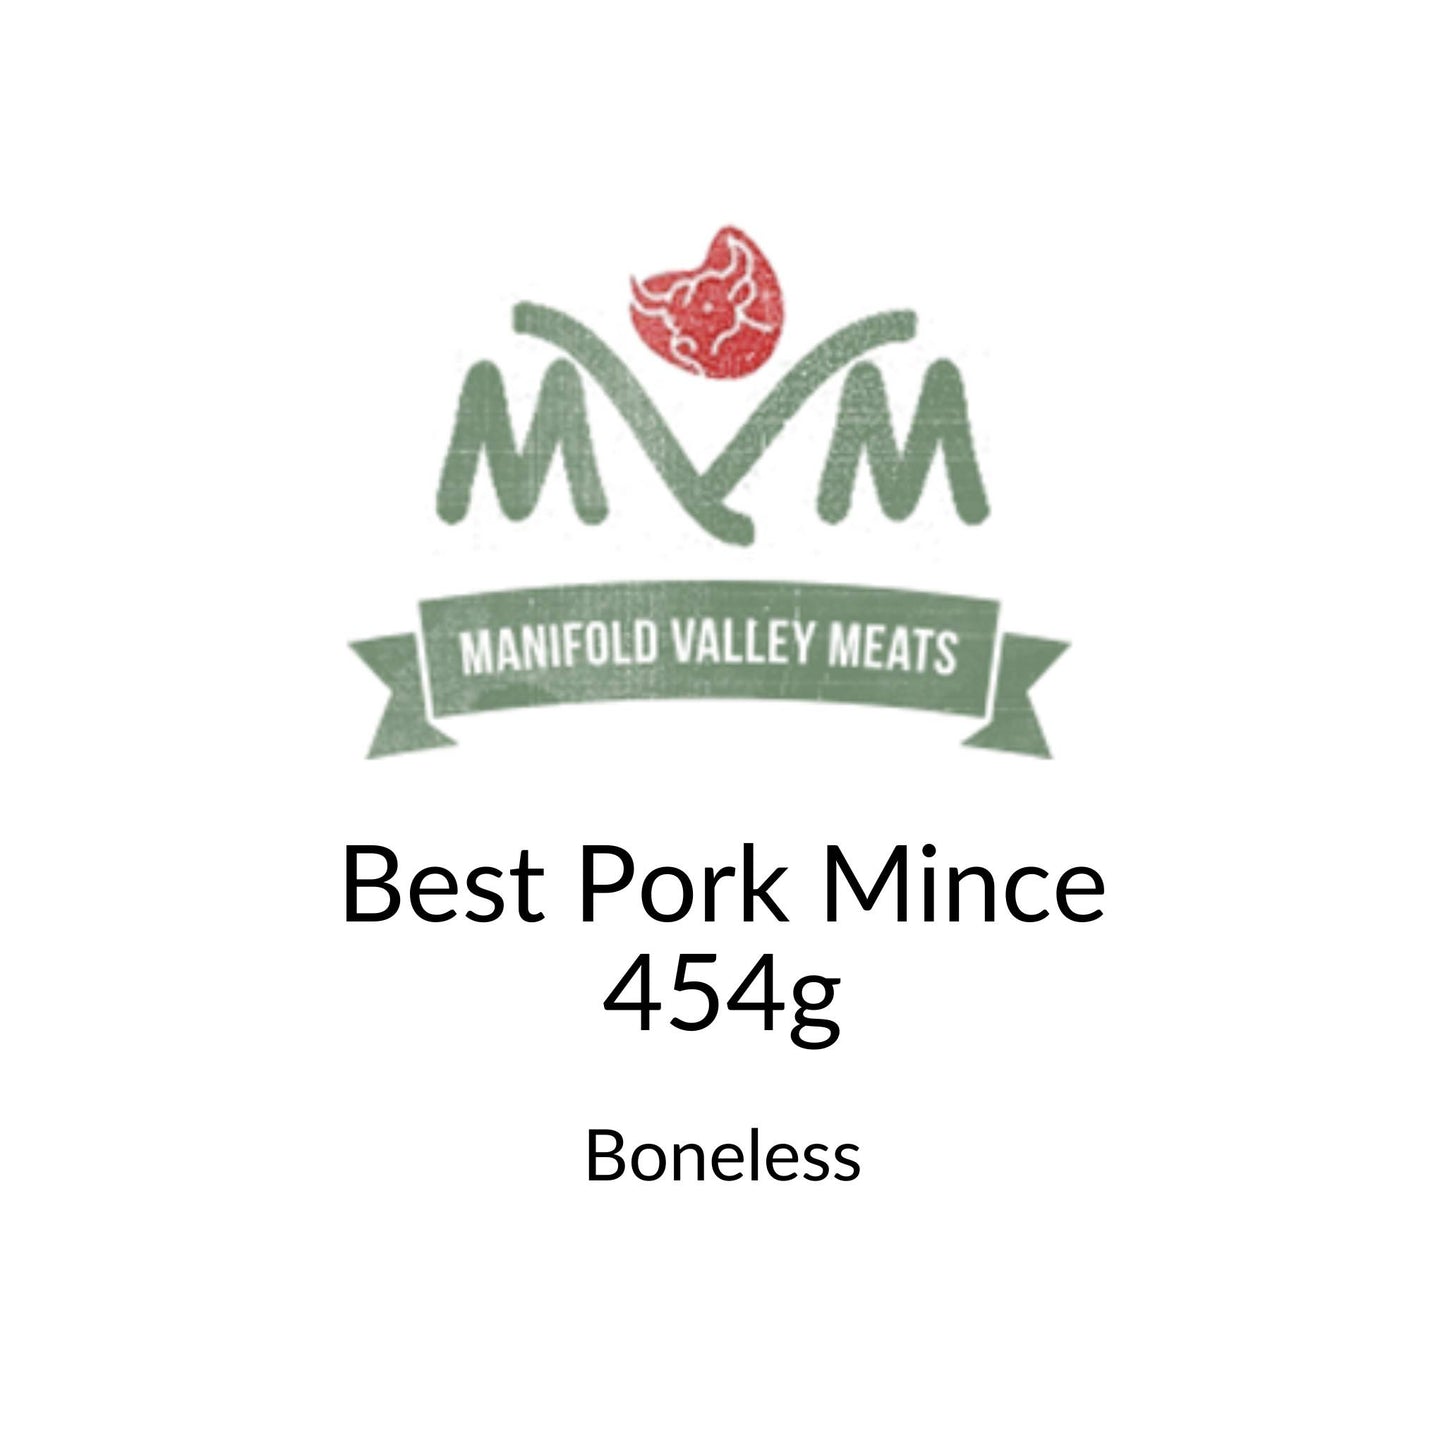 Manifold Valley Meats Best Pork Mince Raw Dog Food